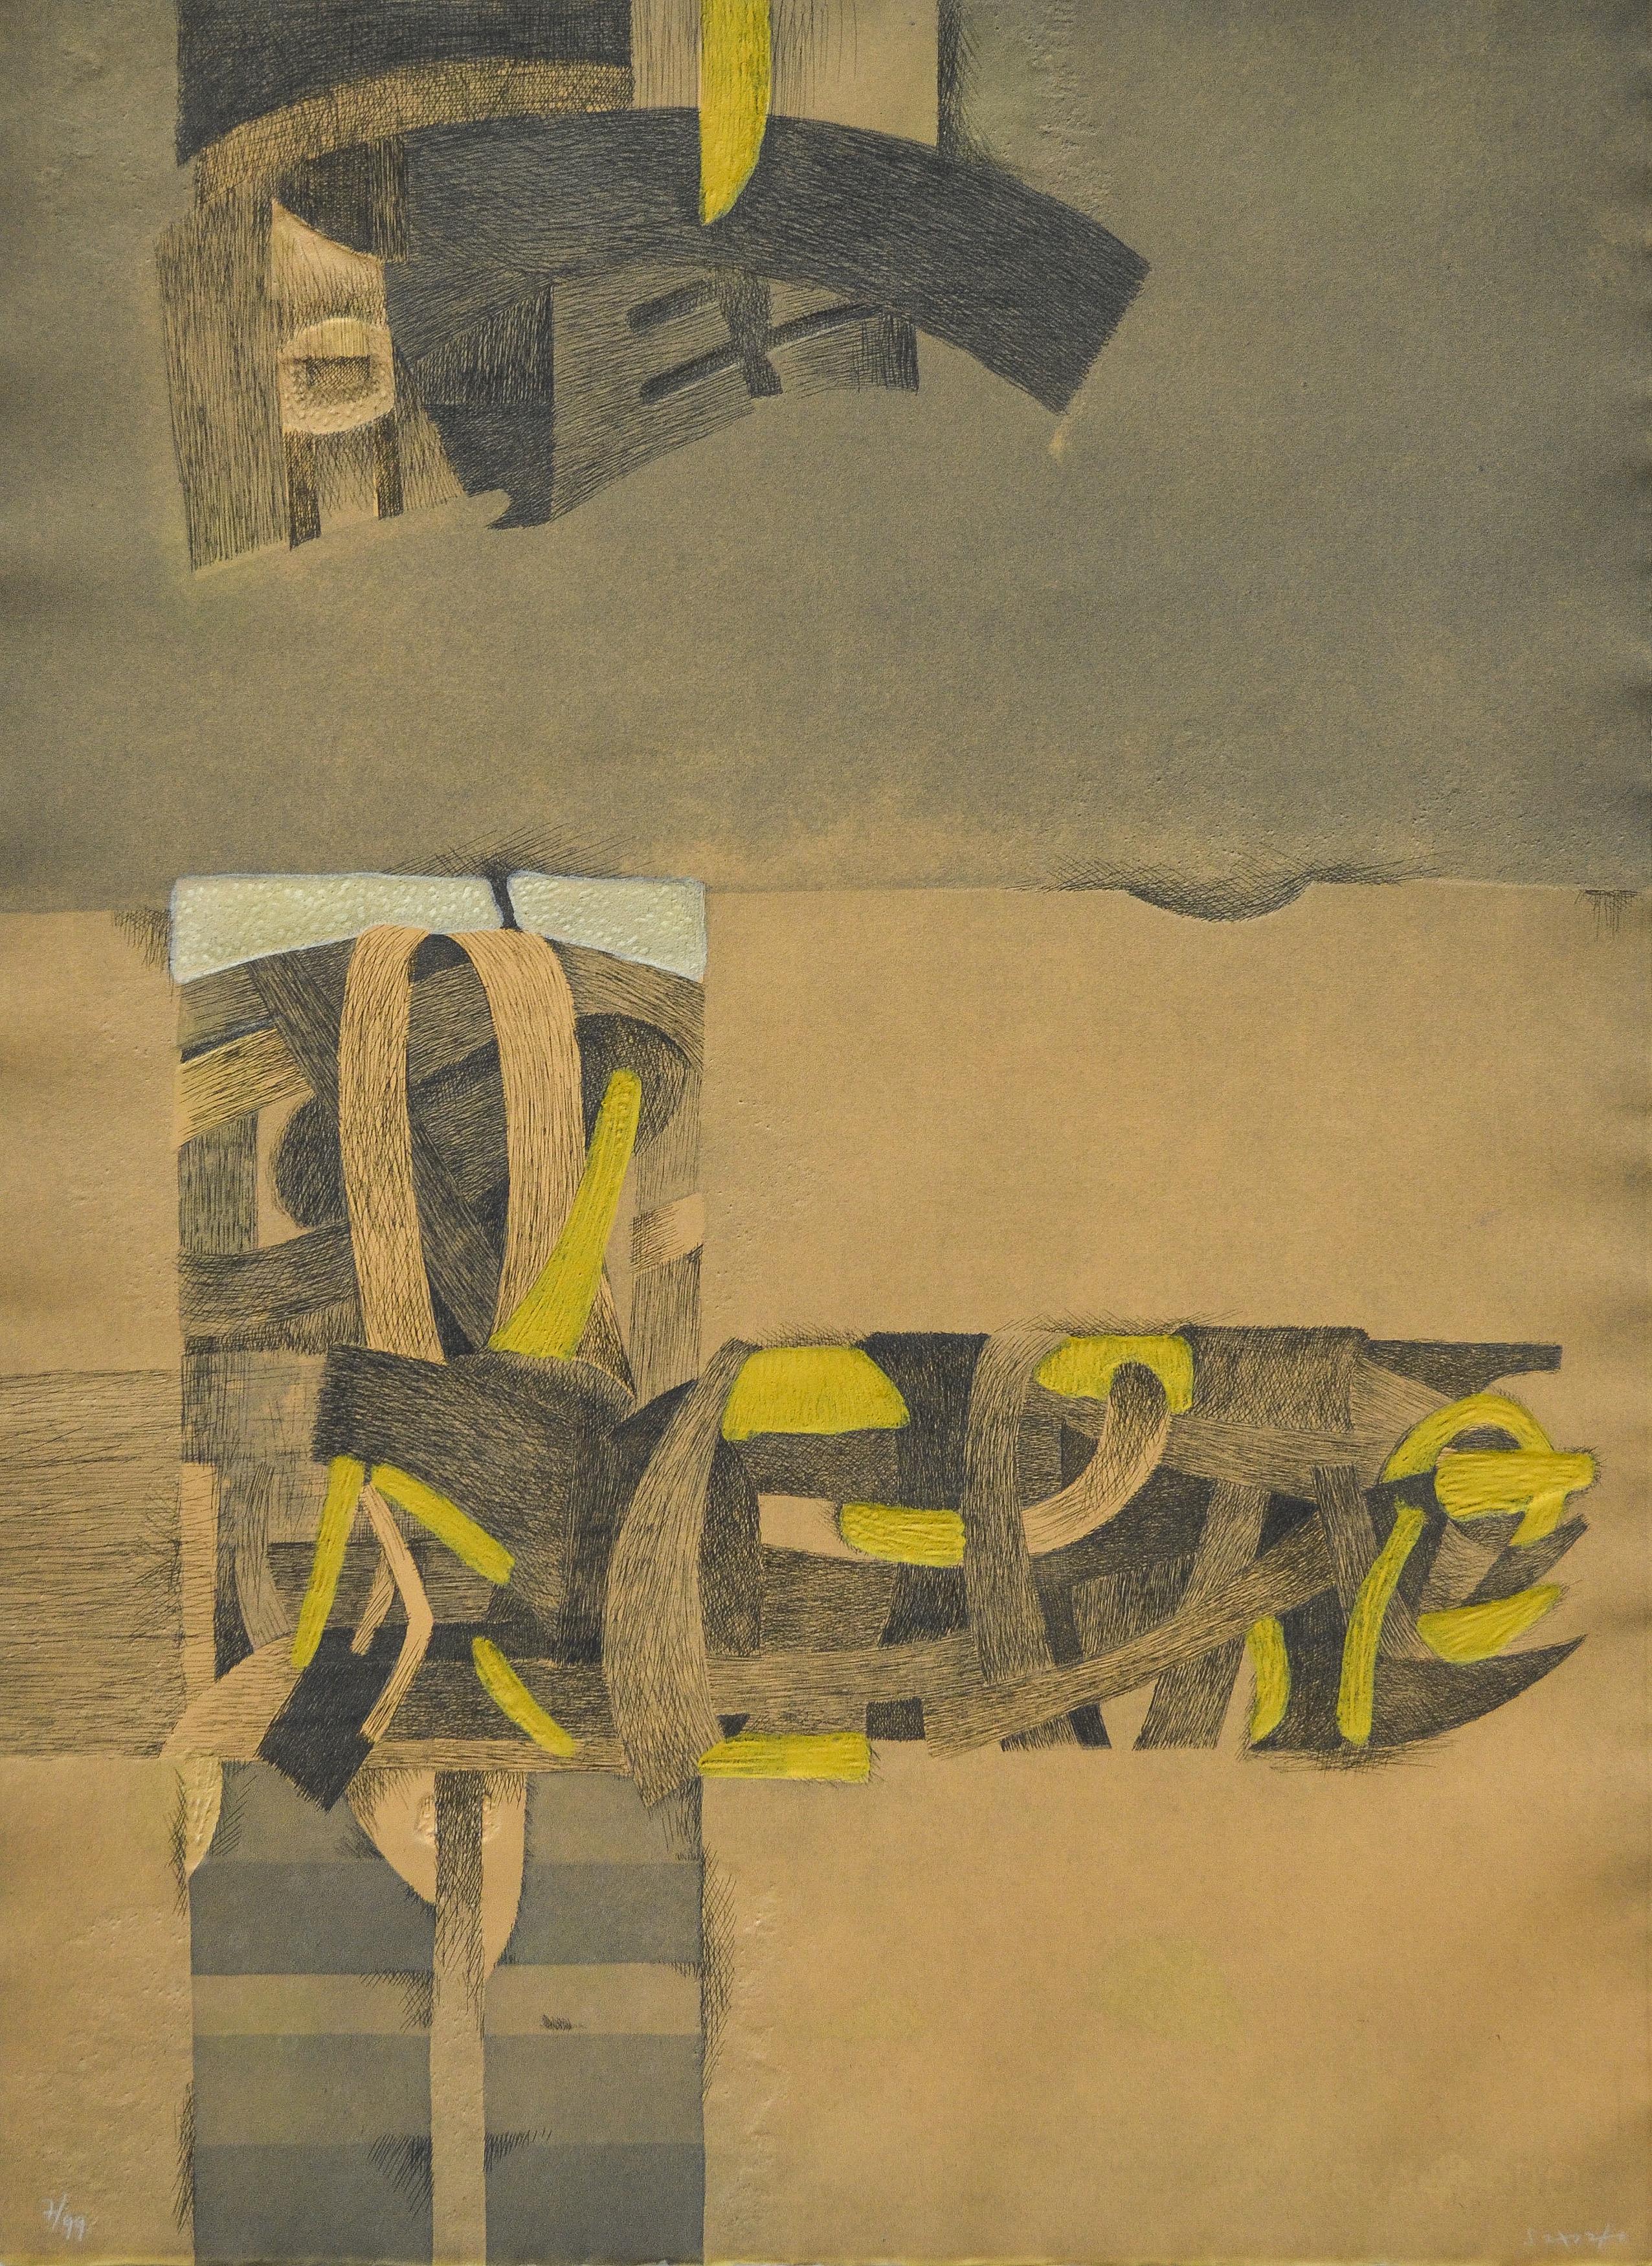 Fernando de Szyszlo Abstract Print - Untitled Edition 7 of 99